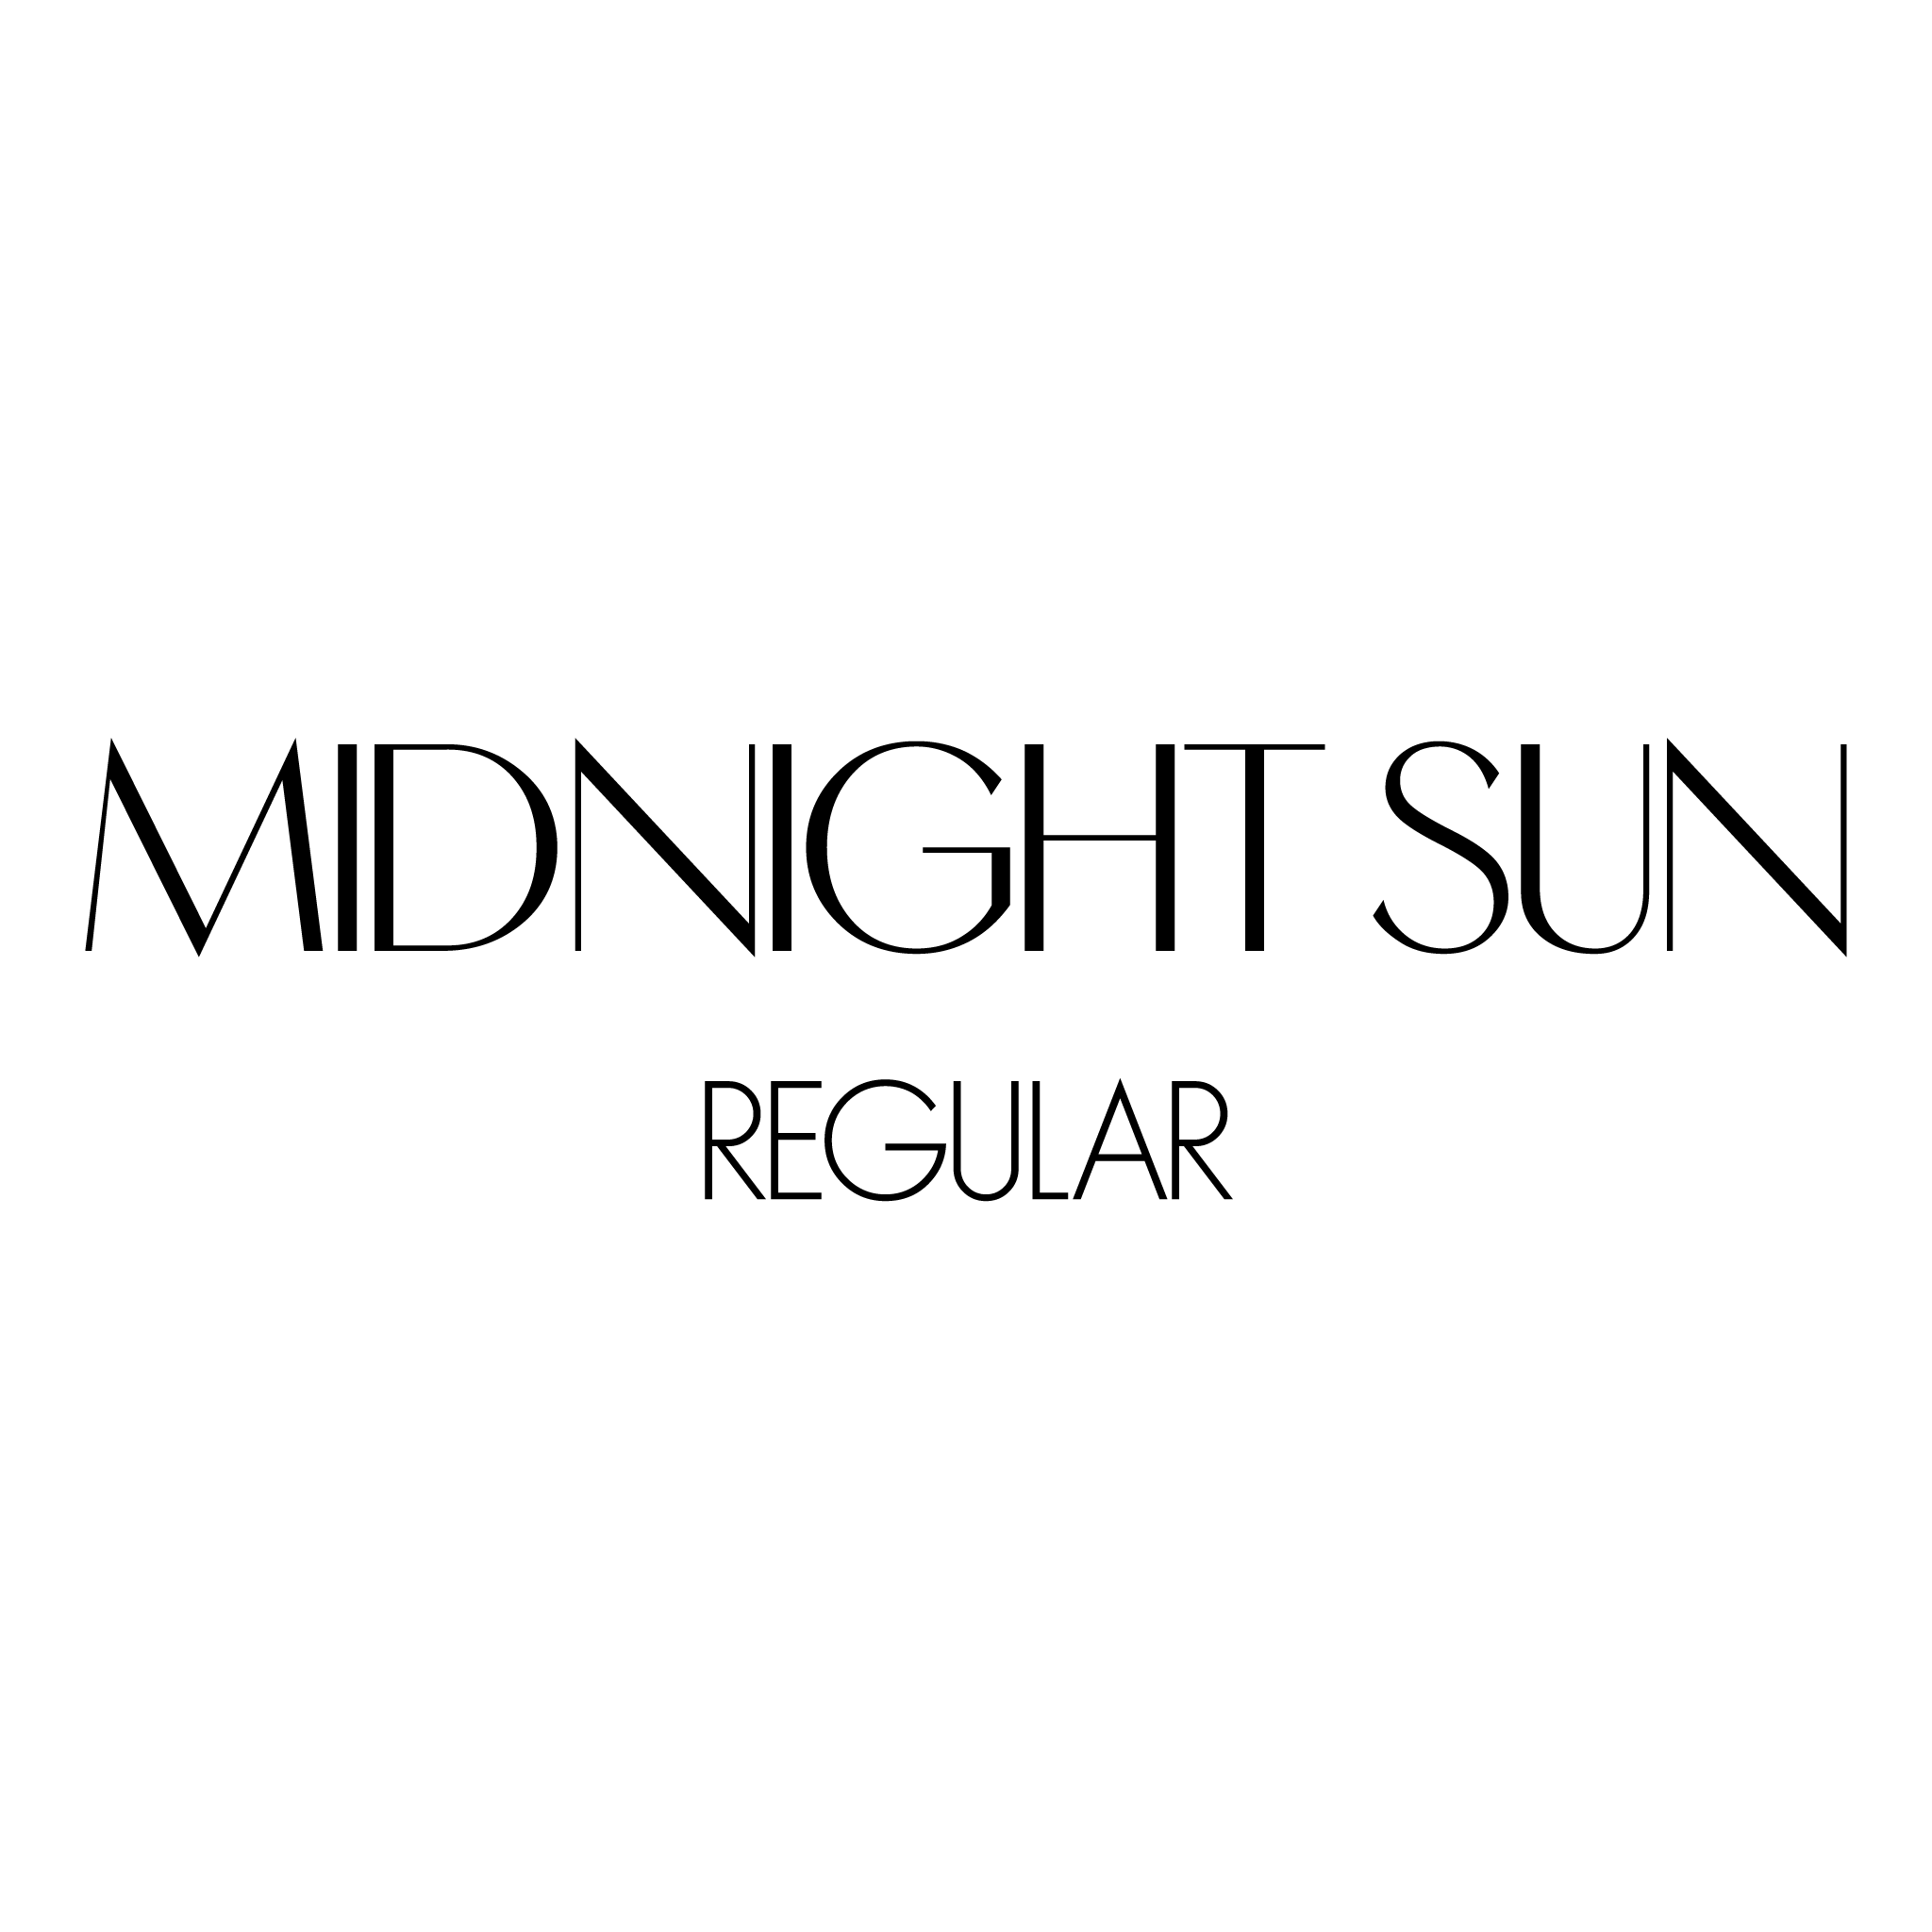 Midnight Sun DF  DAYLIGHT FONTS Online Store